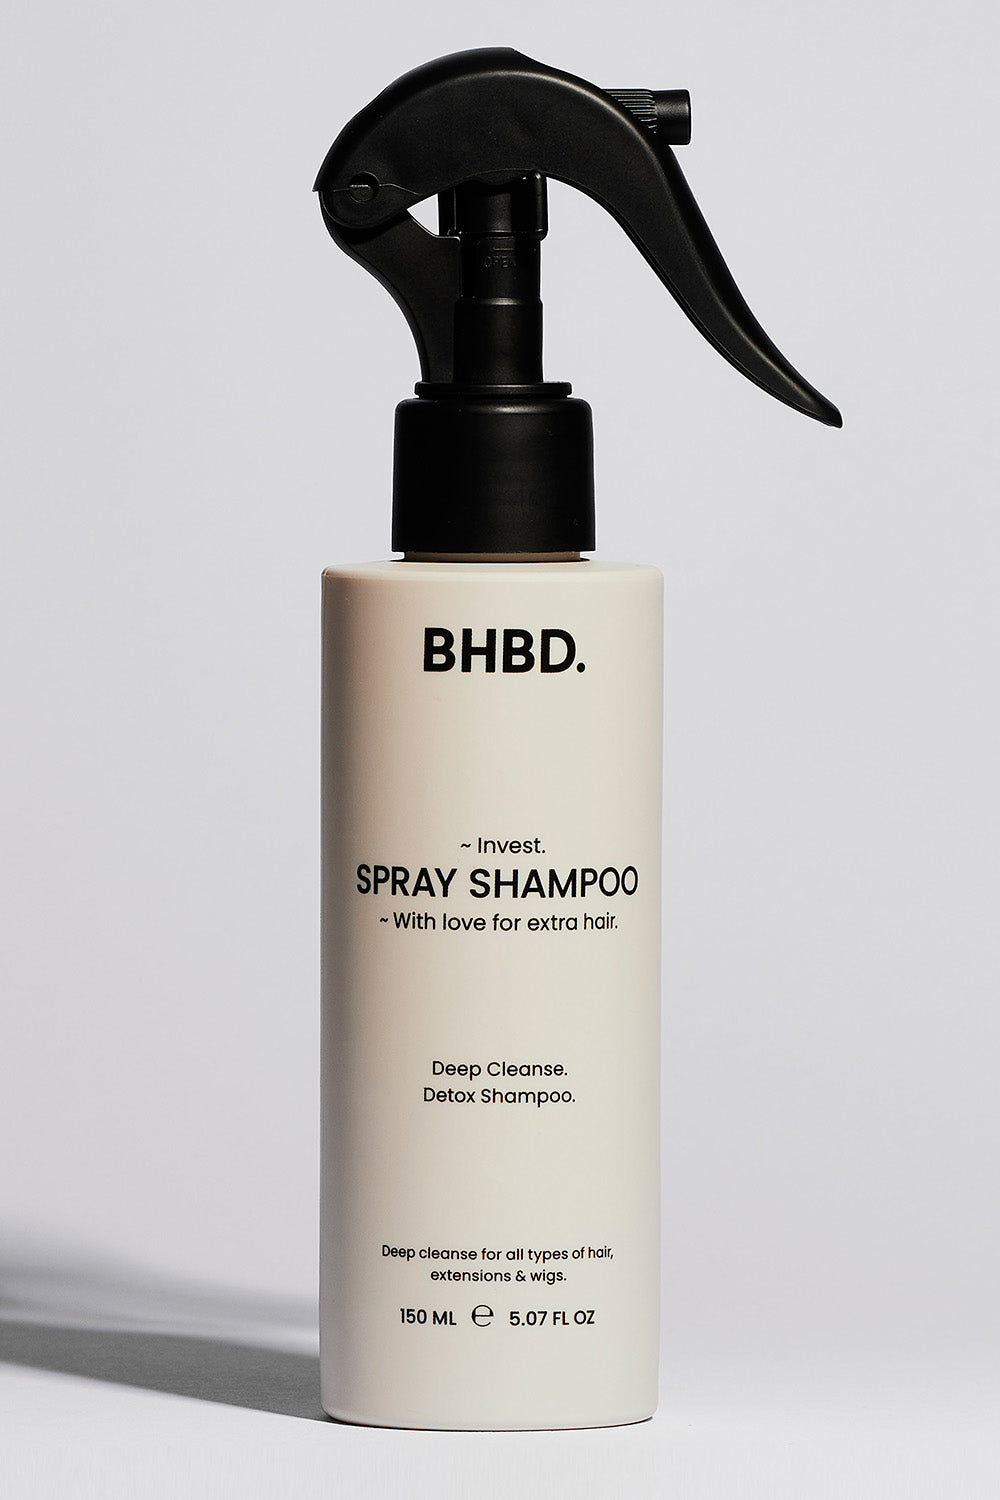 BHBD spray shampoo